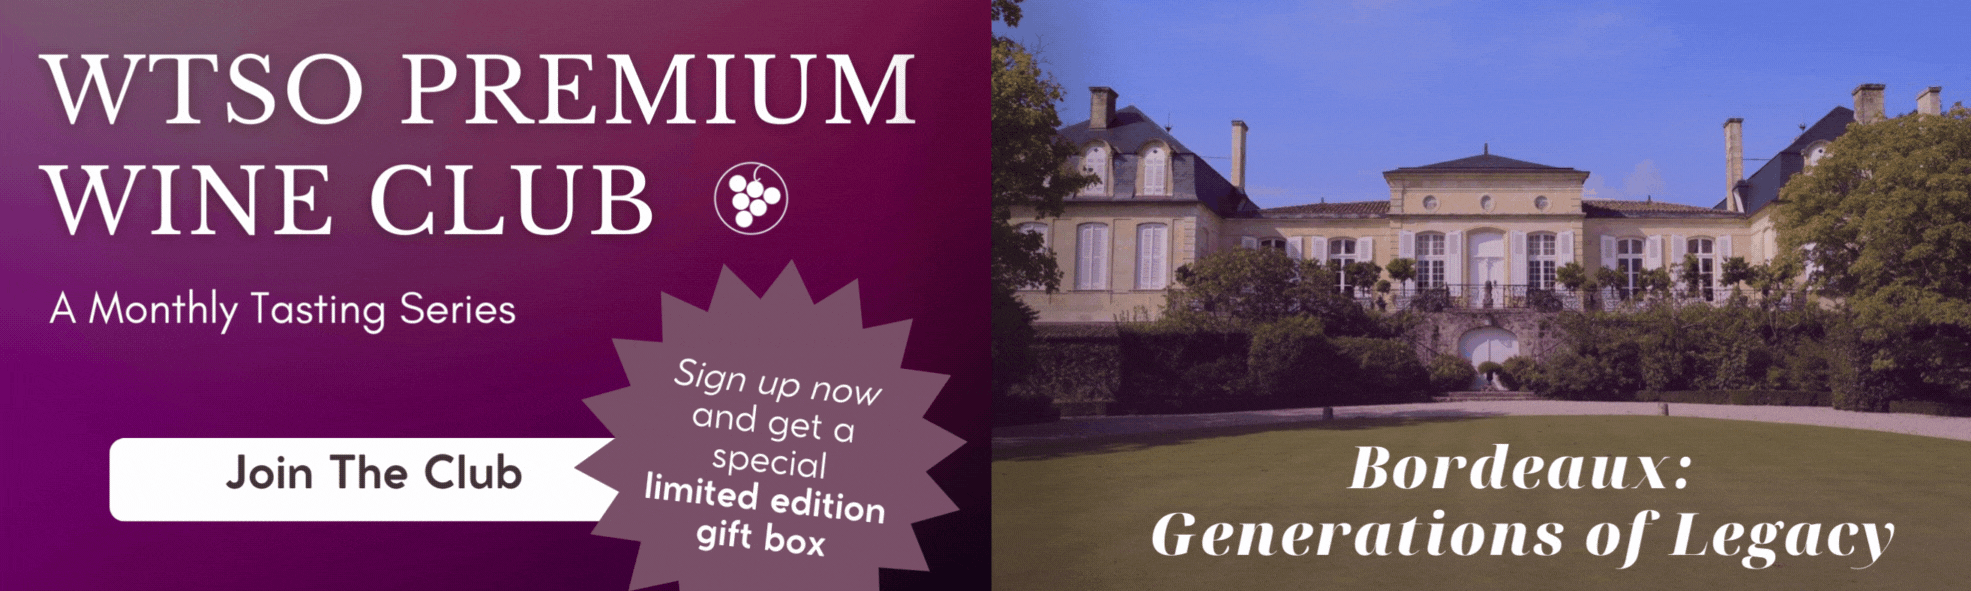 WTSO Premium Wine Club | Bordeaux: Generations of Legacy